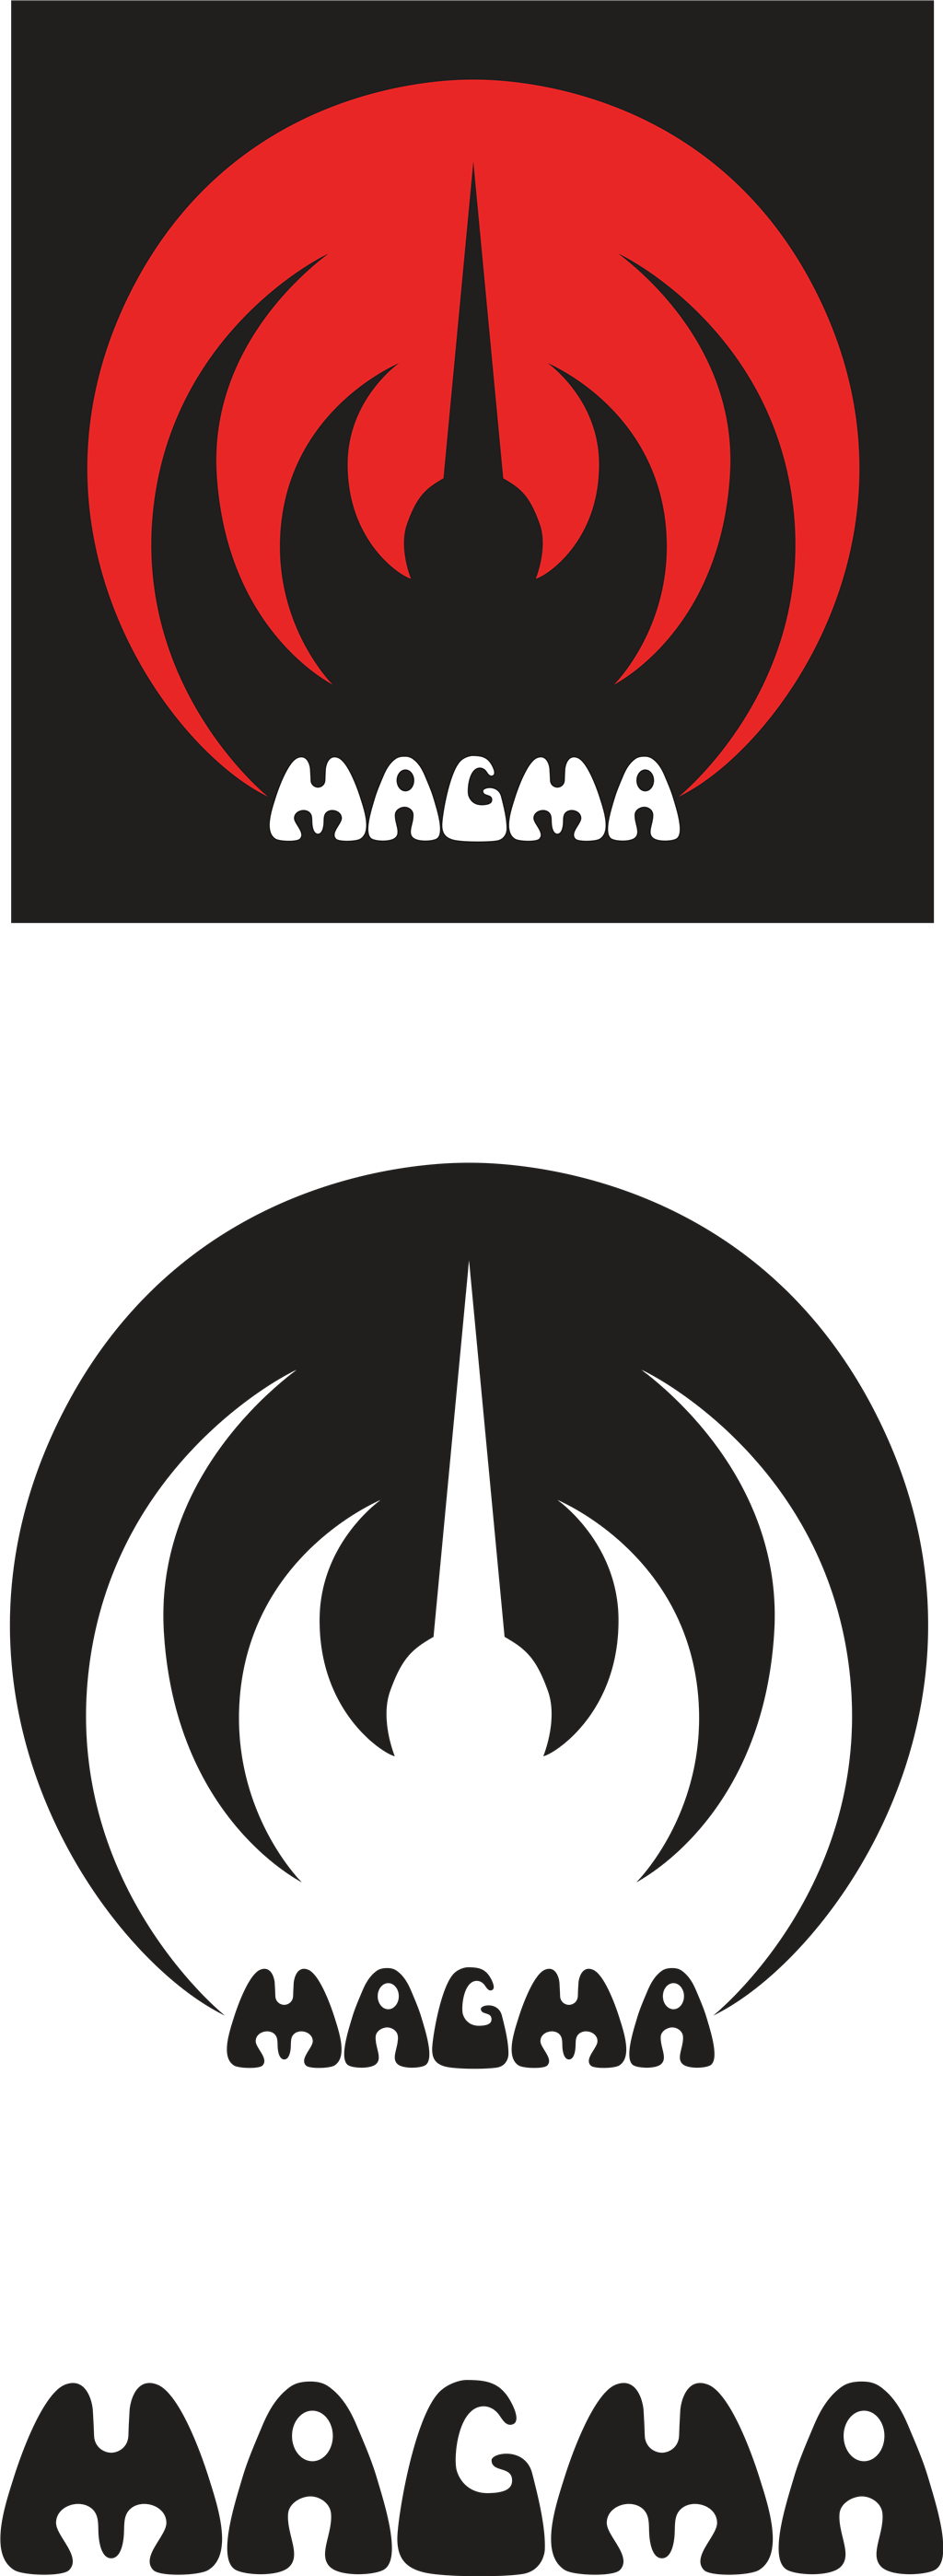 Magma logotype, transparent .png, medium, large